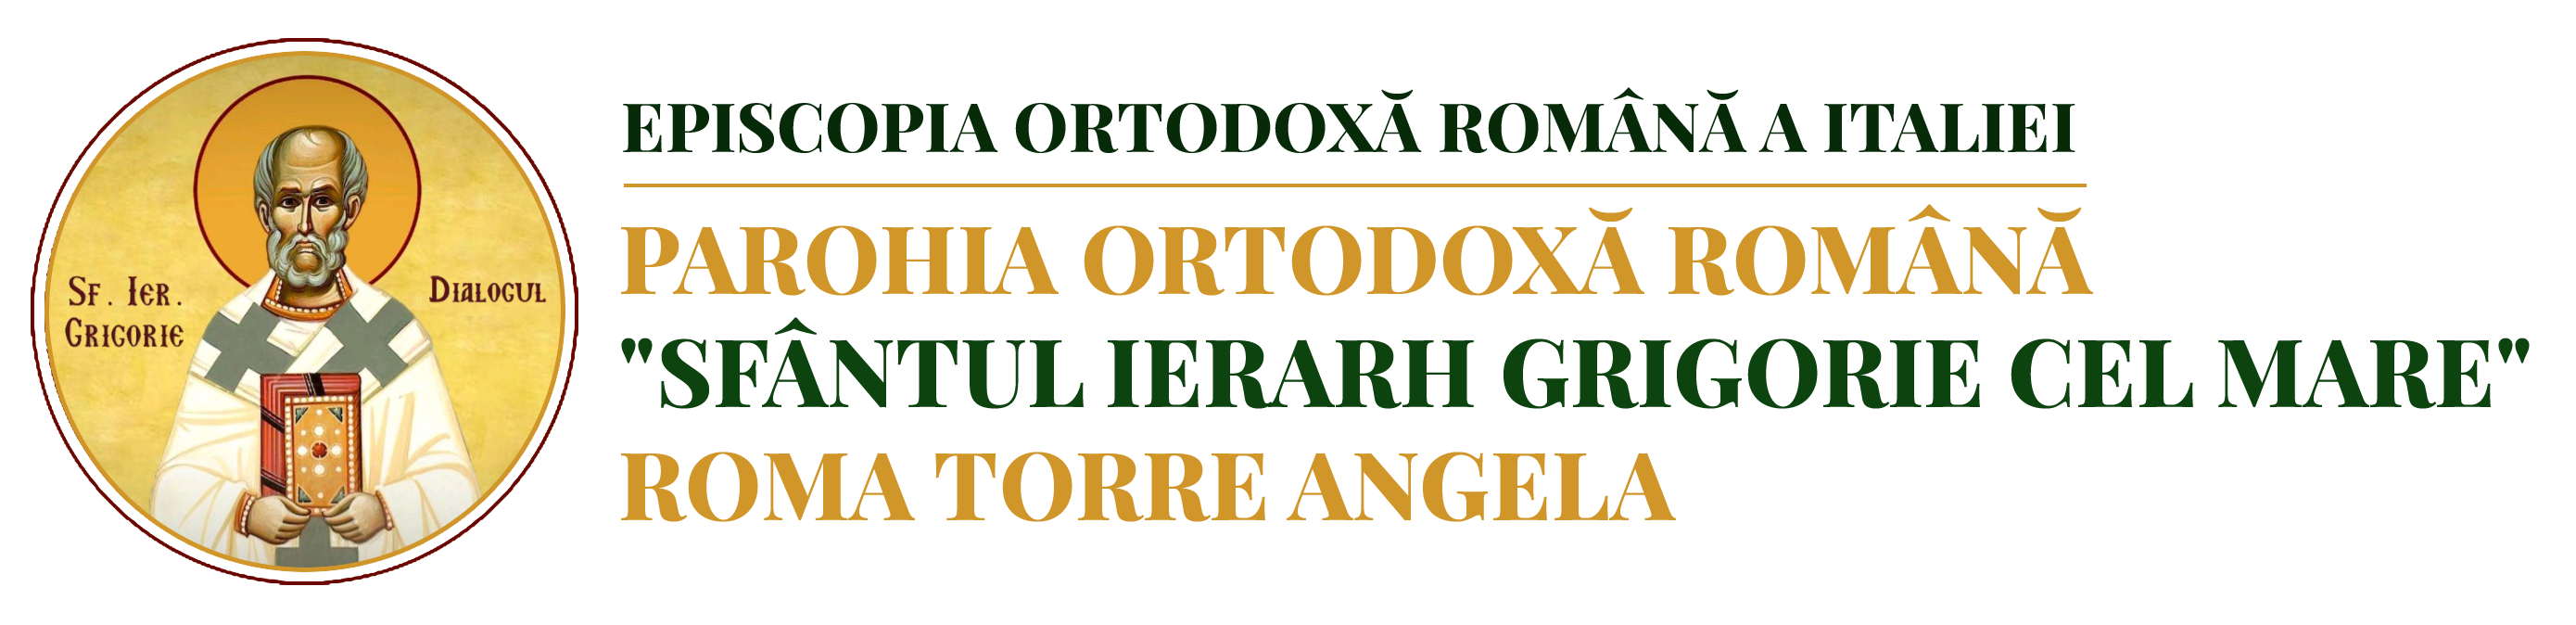 Biserica Parohia Ortodoxă Română